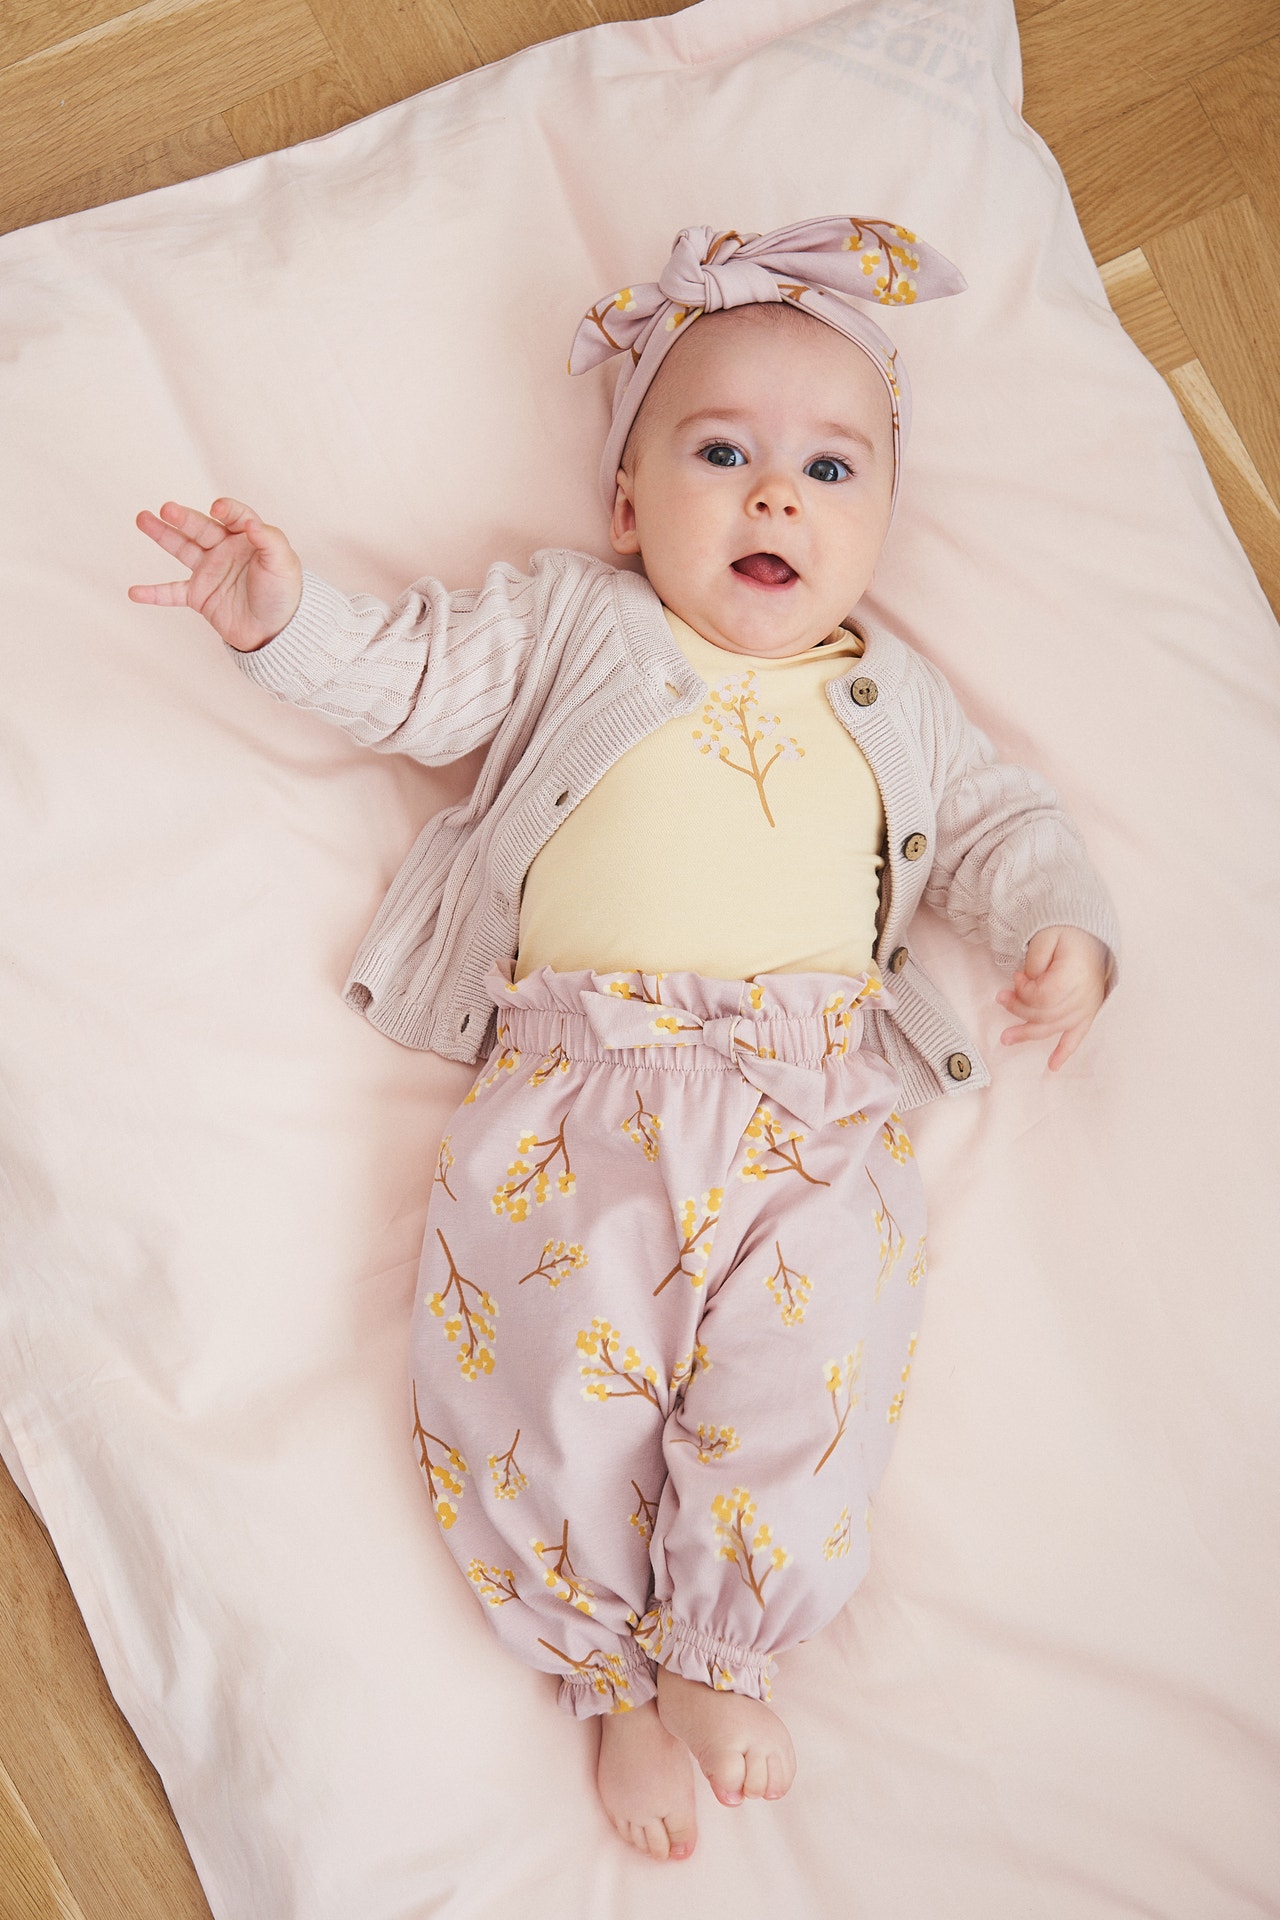 MAMA.LICIOUS Baby-bodysuit -Calm Yellow - 1582057600